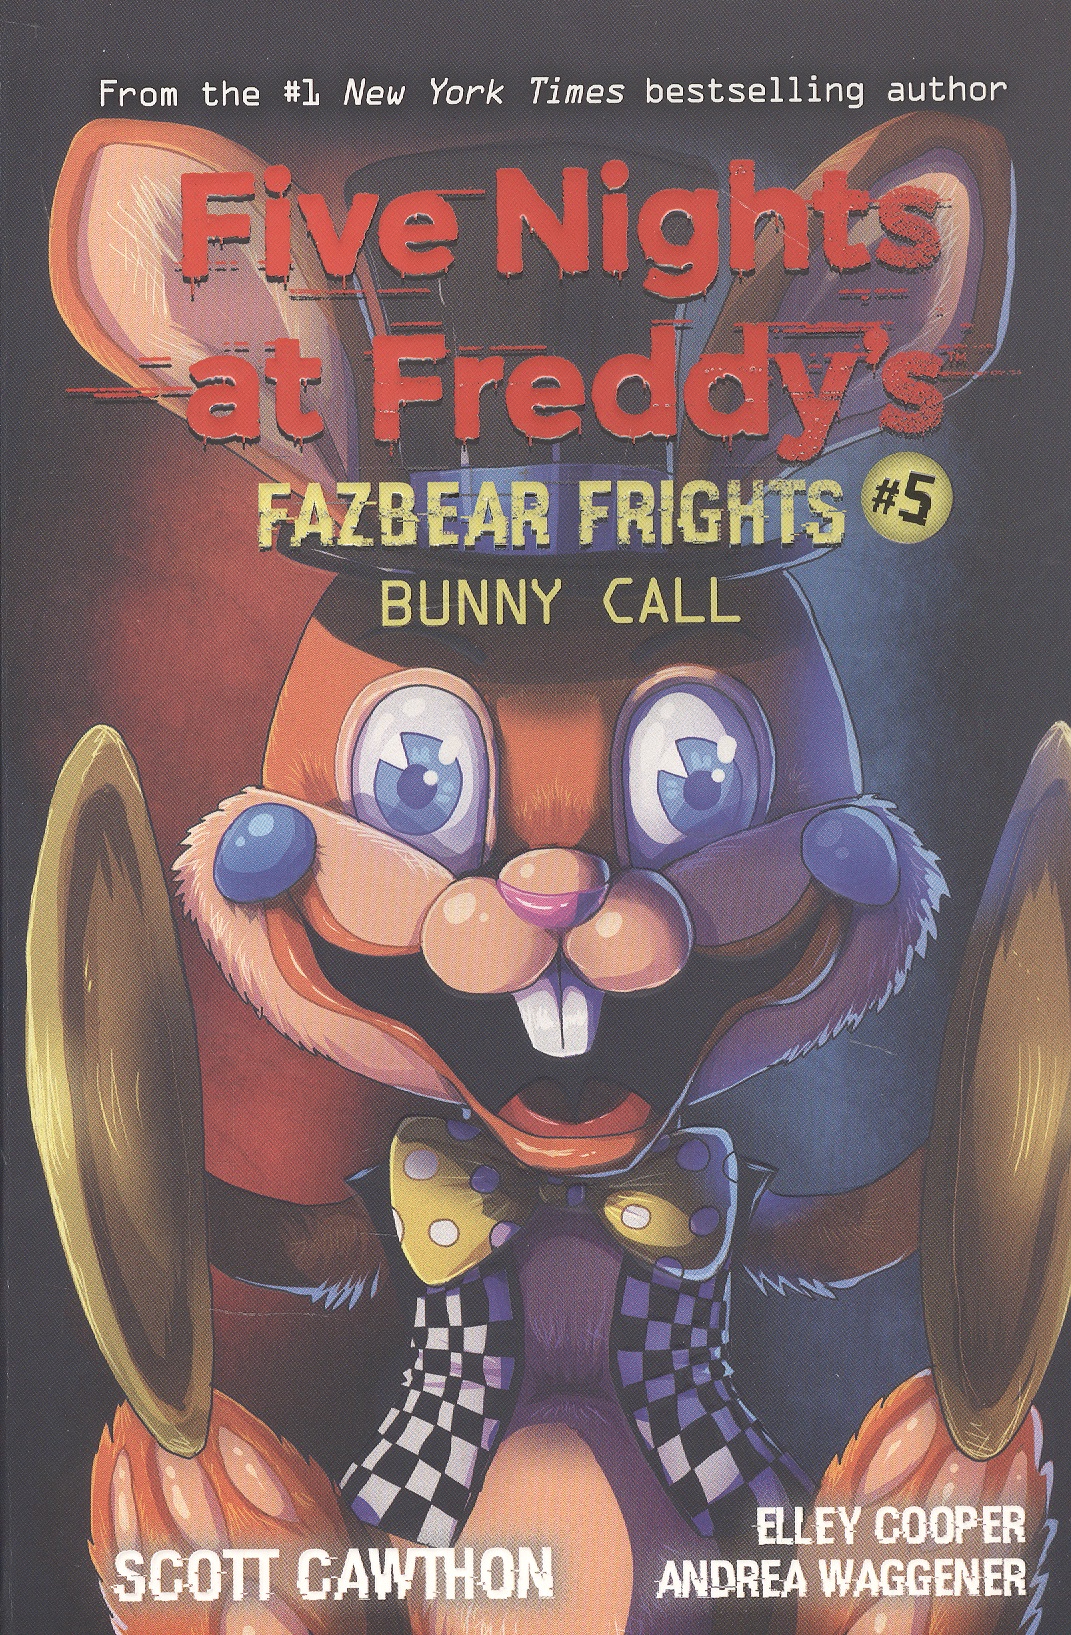 Five nights at freddys: Fazbear Frights #5. Bunny Call